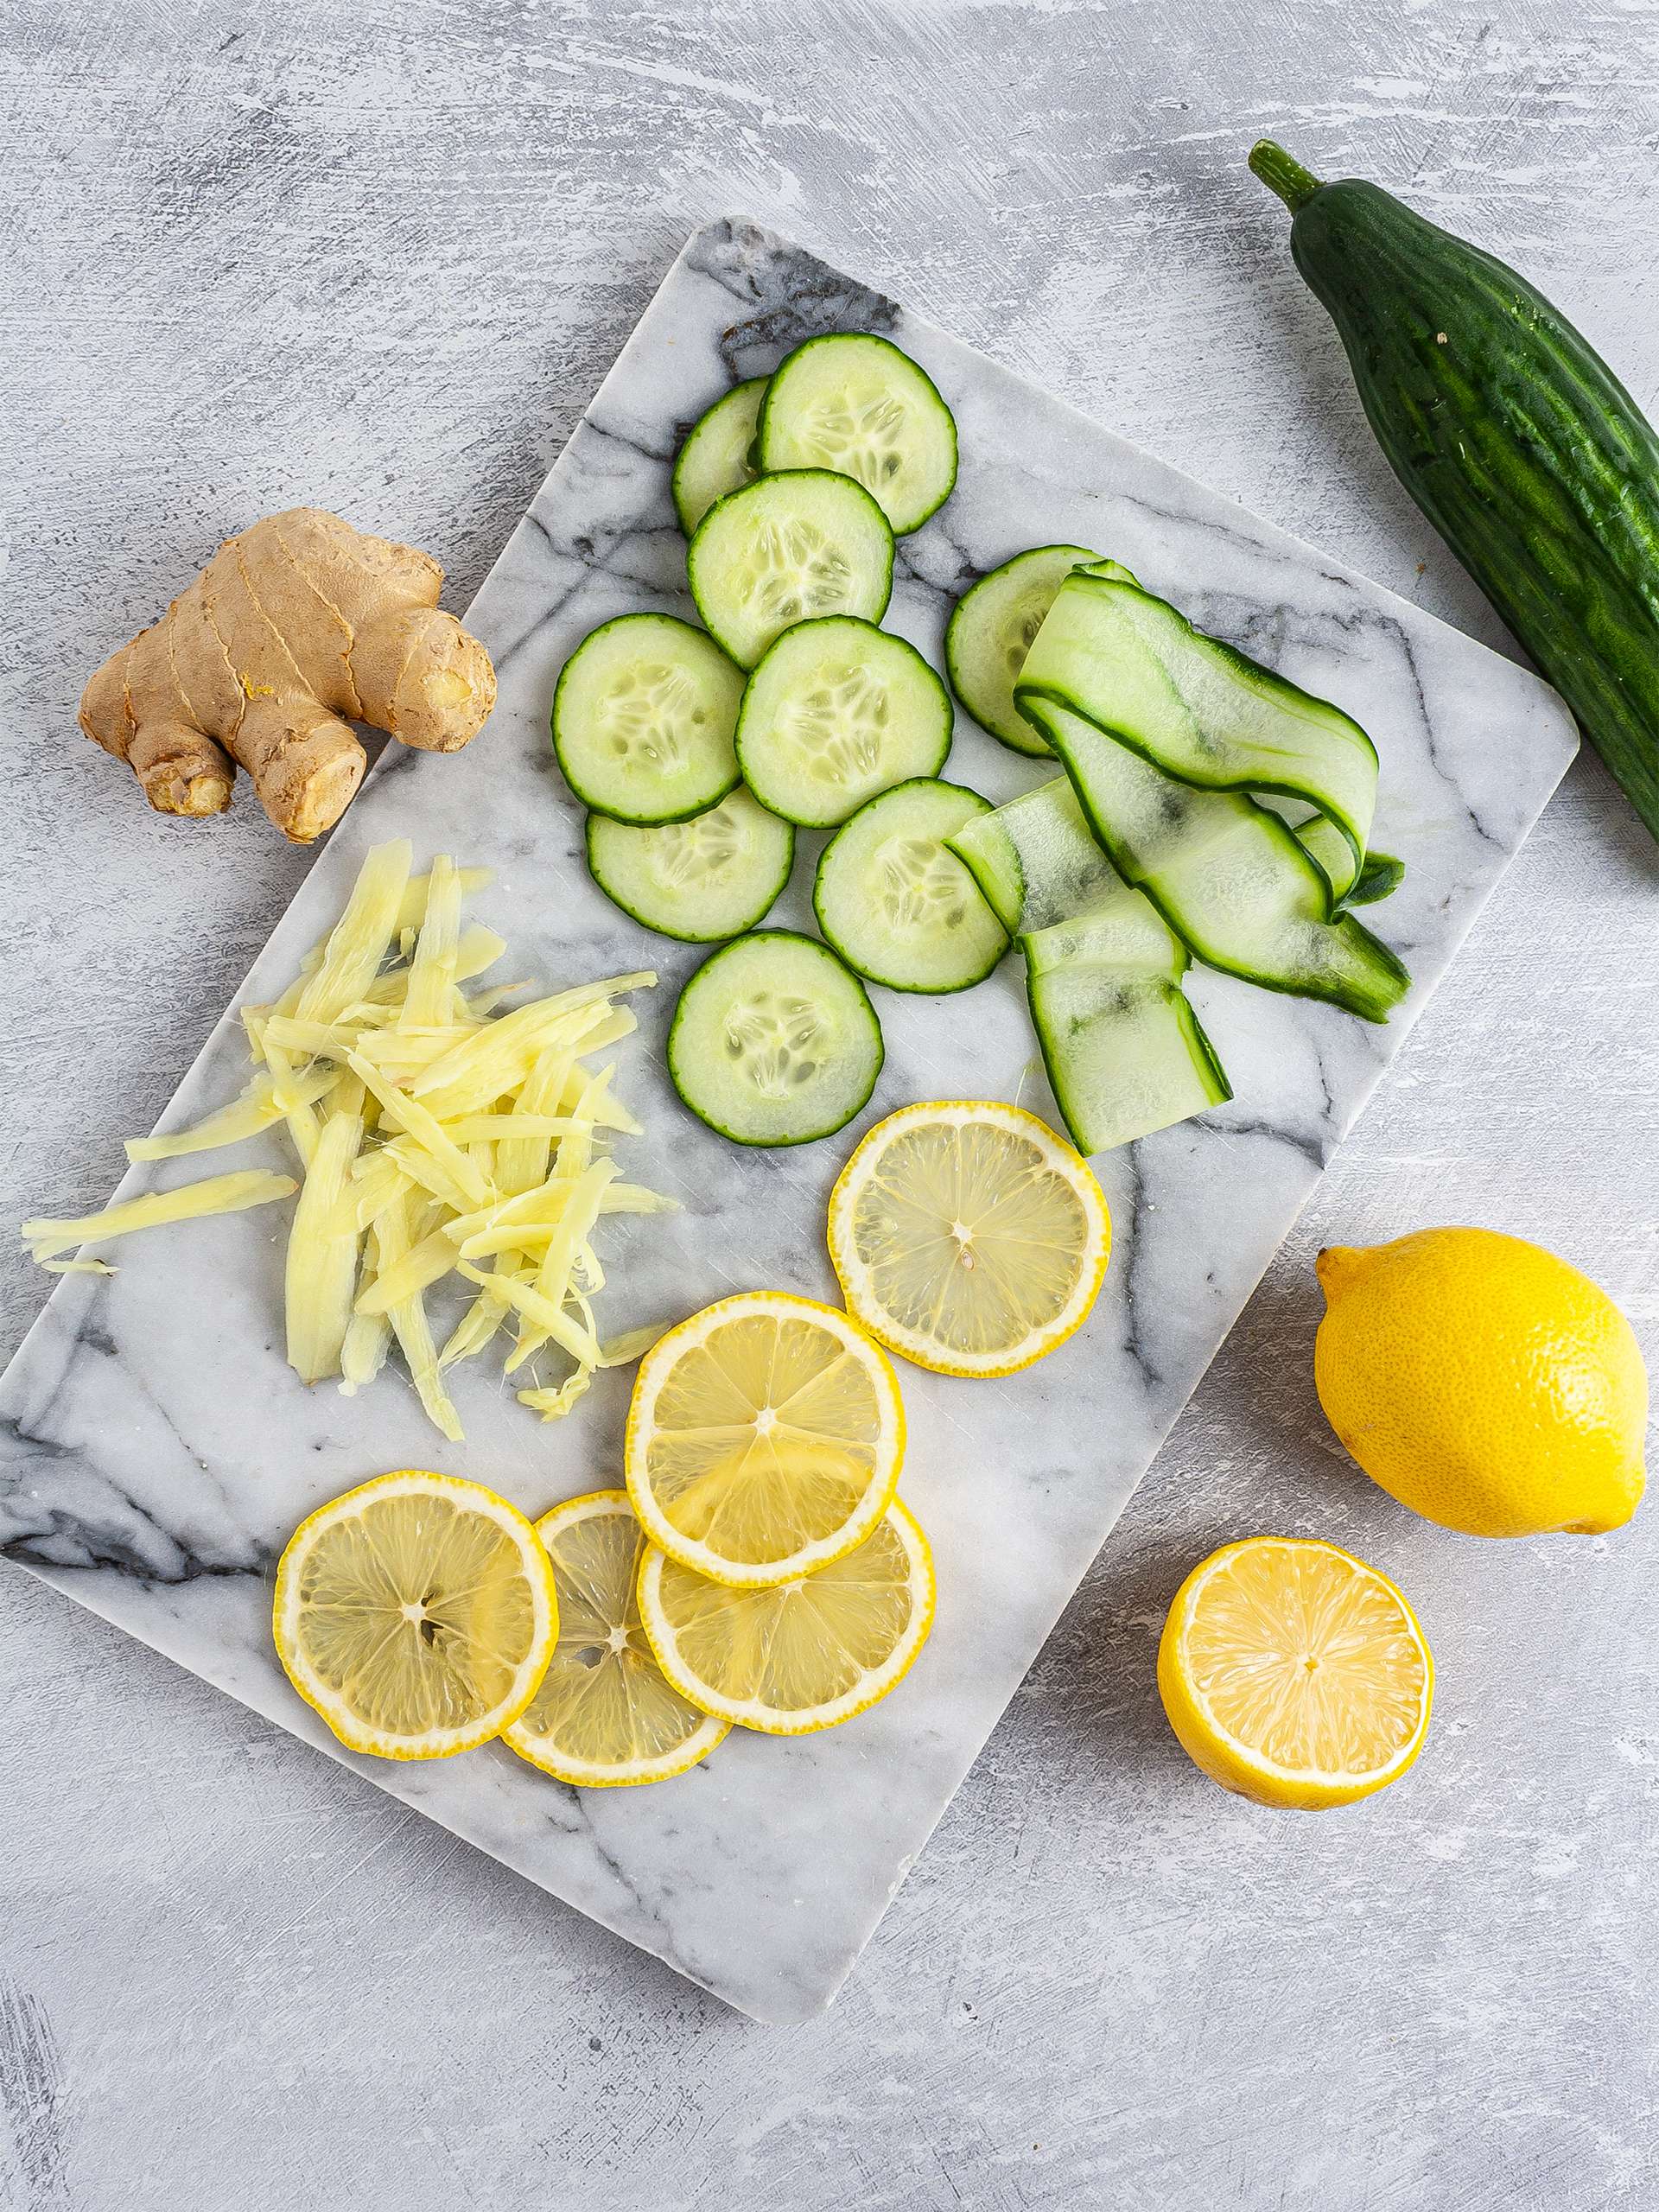 Sliced ginger, lemon, and cucumber